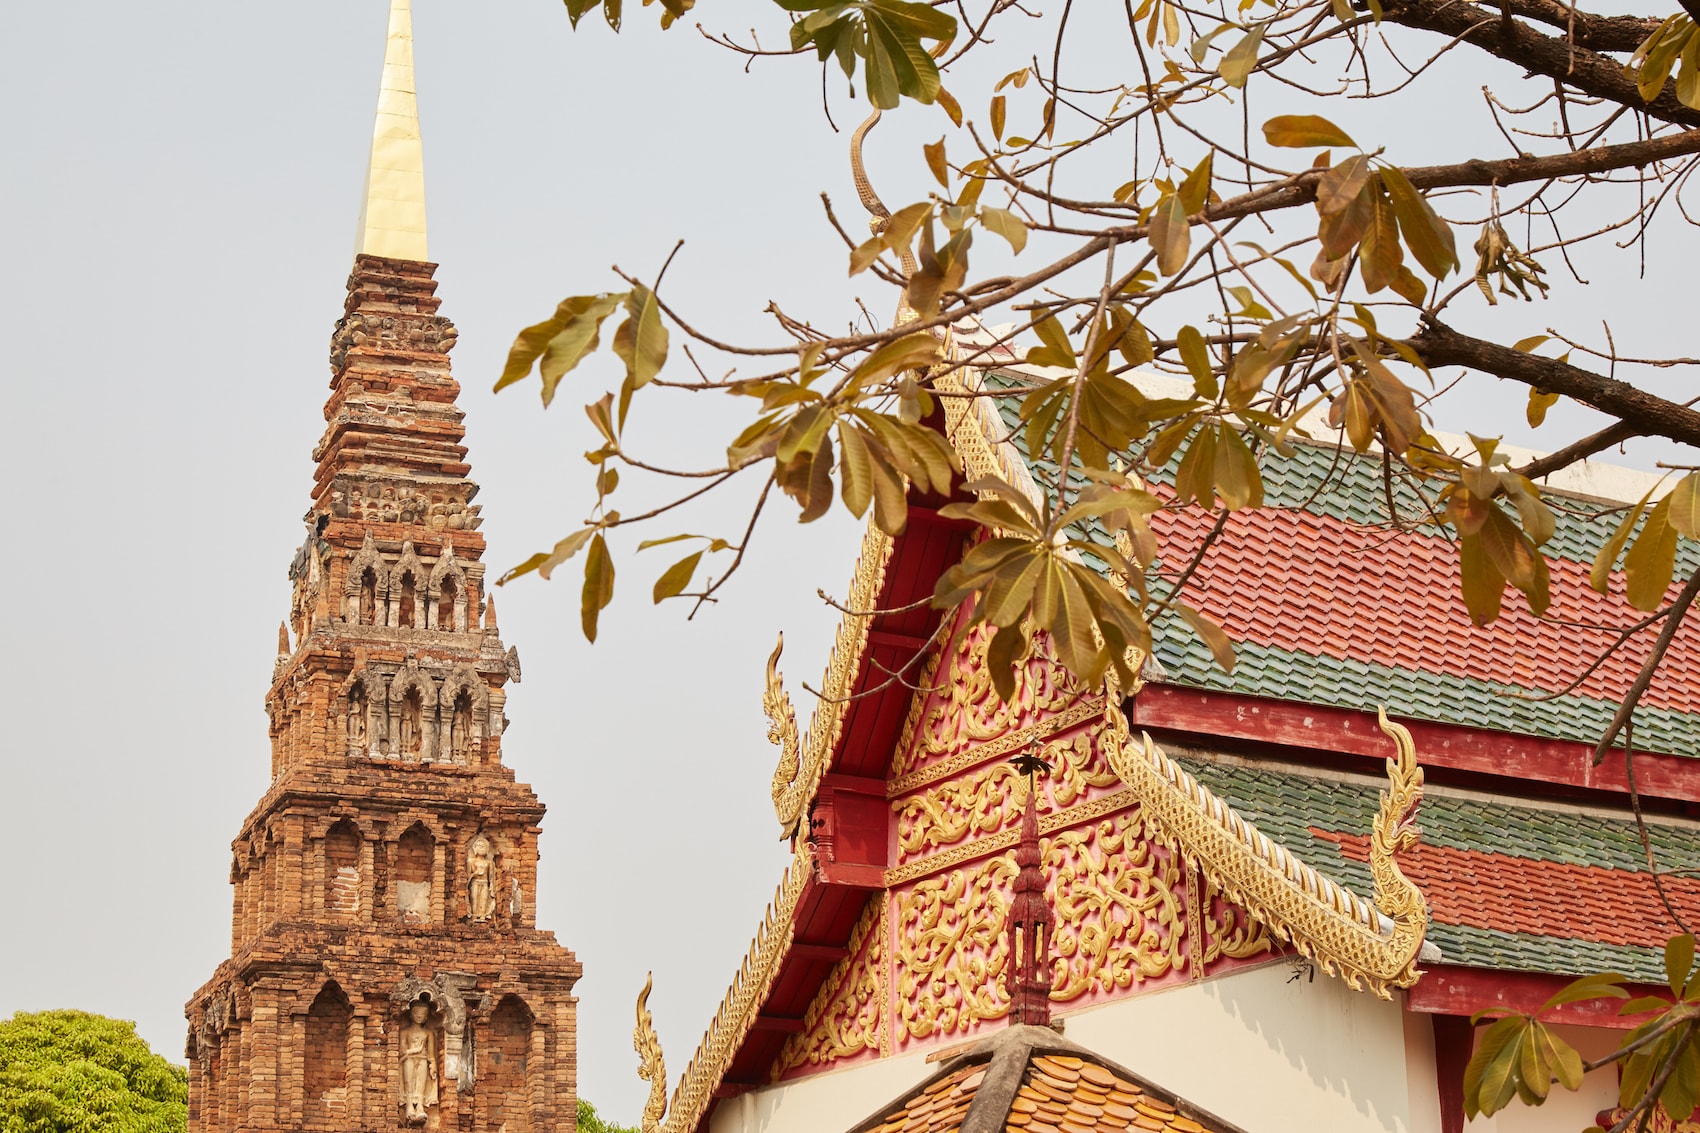 Phra That Haripunchai